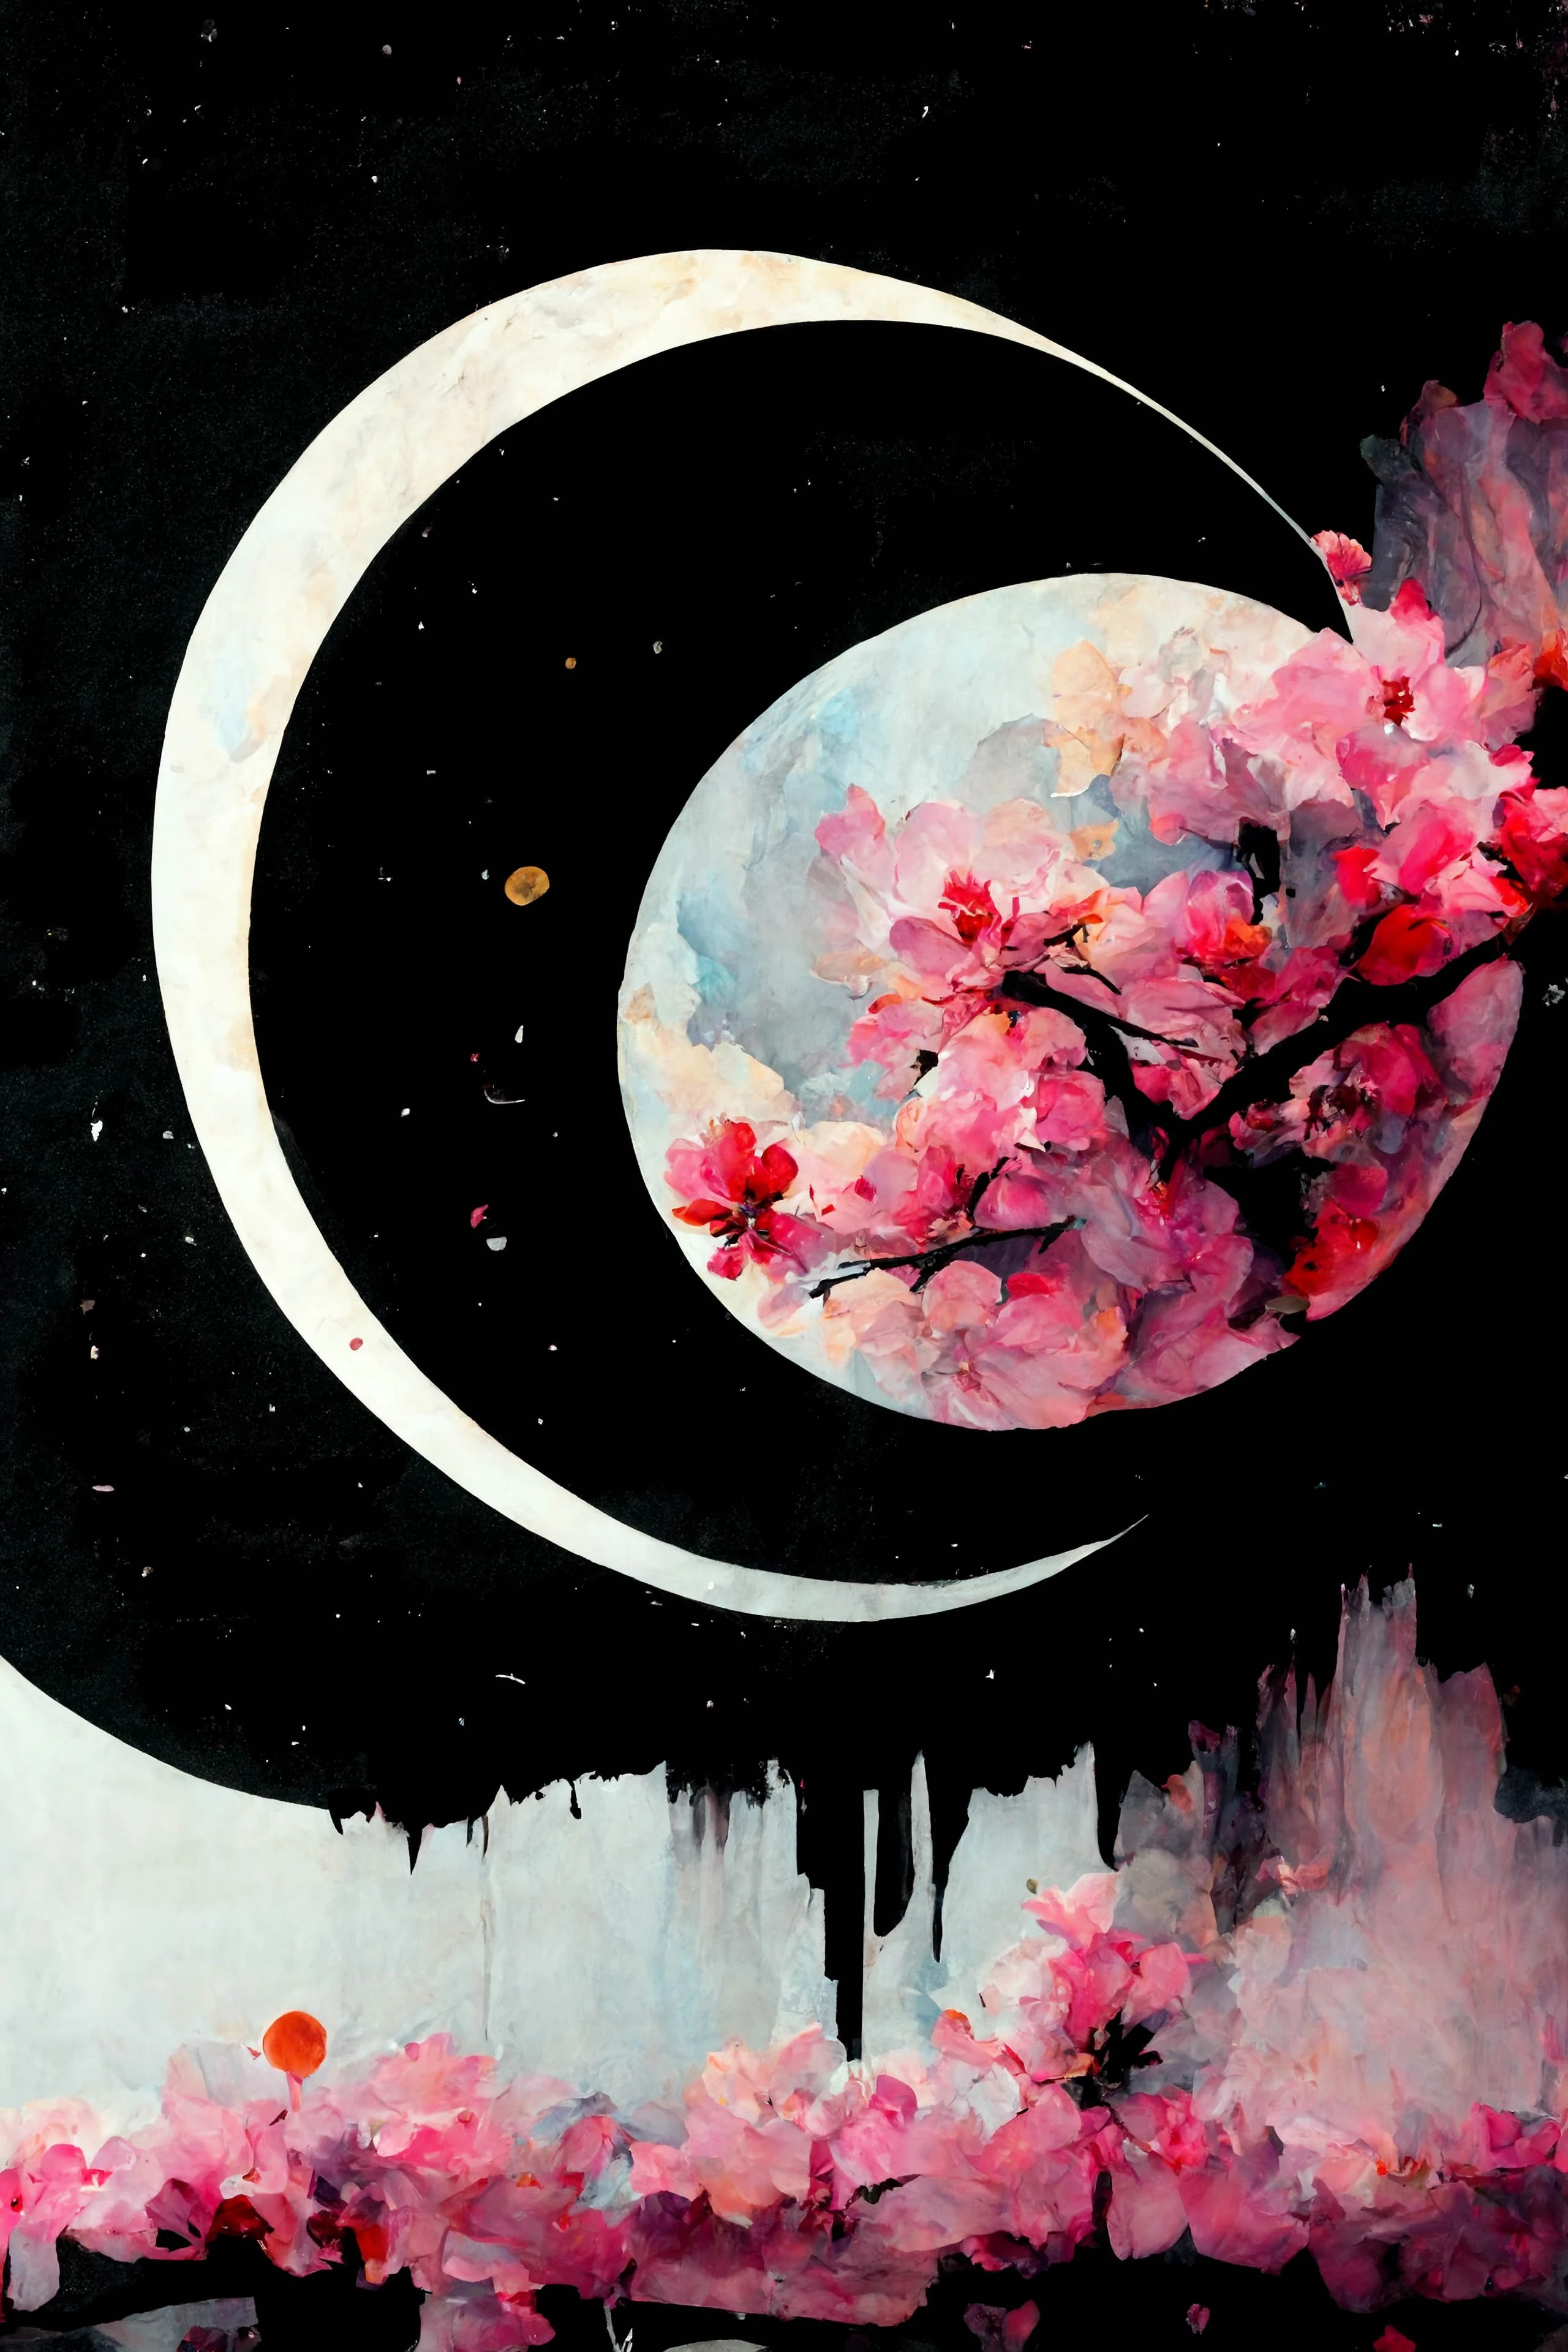 [Midjourney] Flor de cerezo loco abstracte triste luna [Realista]